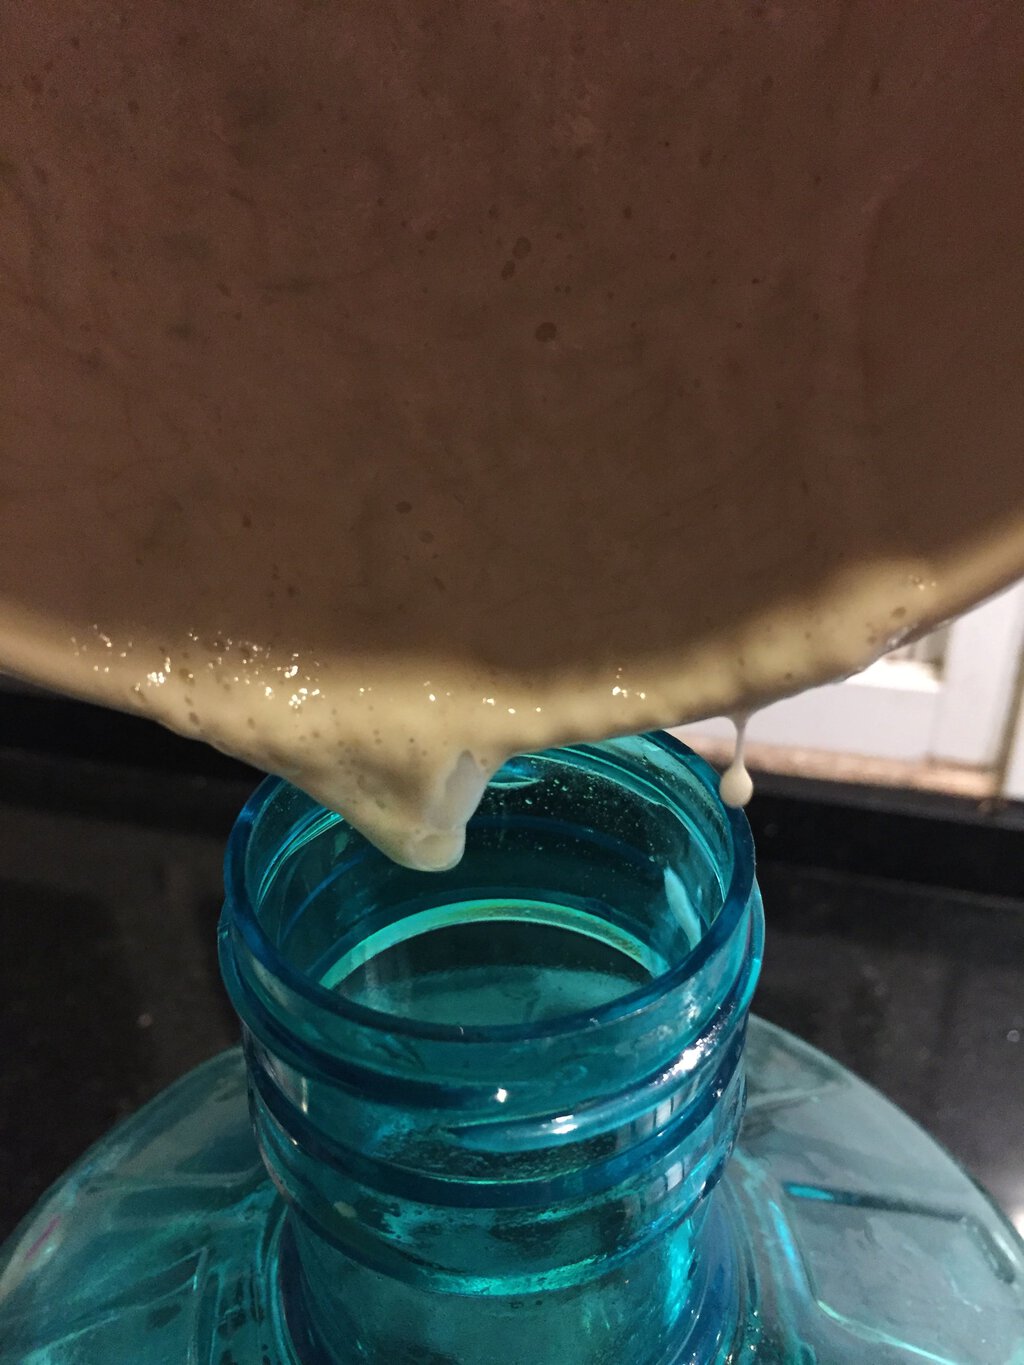 Adding sourdough culture to kvass